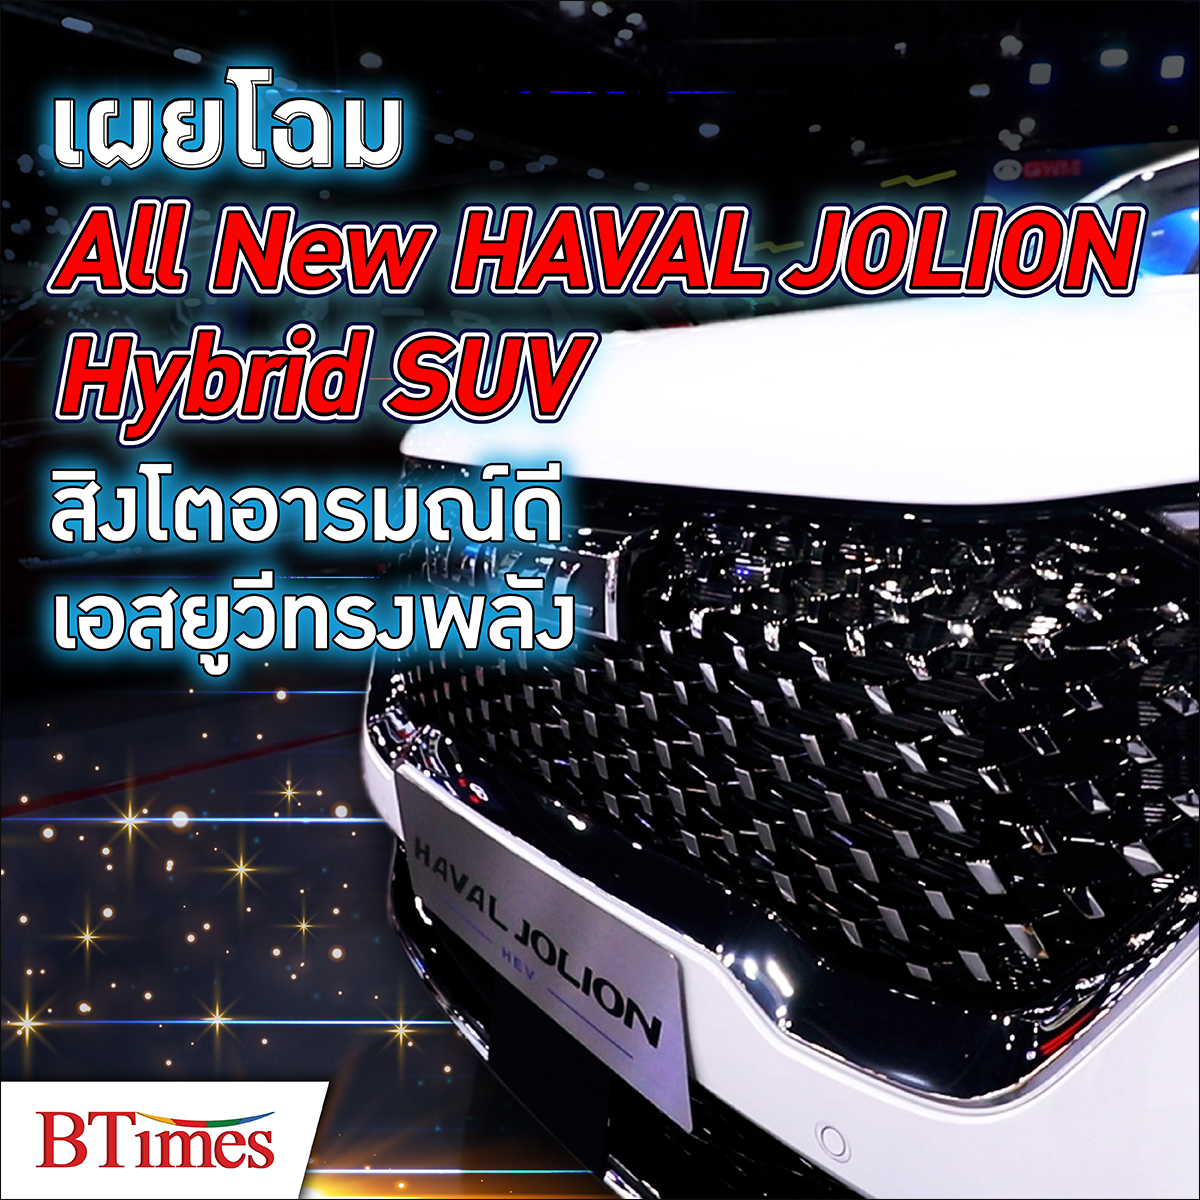 BTimes: ยลโฉม 'All New HAVAL JOLION Hybrid SUV' สิงโตอารมณ์ดีเอสยูวีทรงพลังจากเกรท วอลล์ มอเตอร์